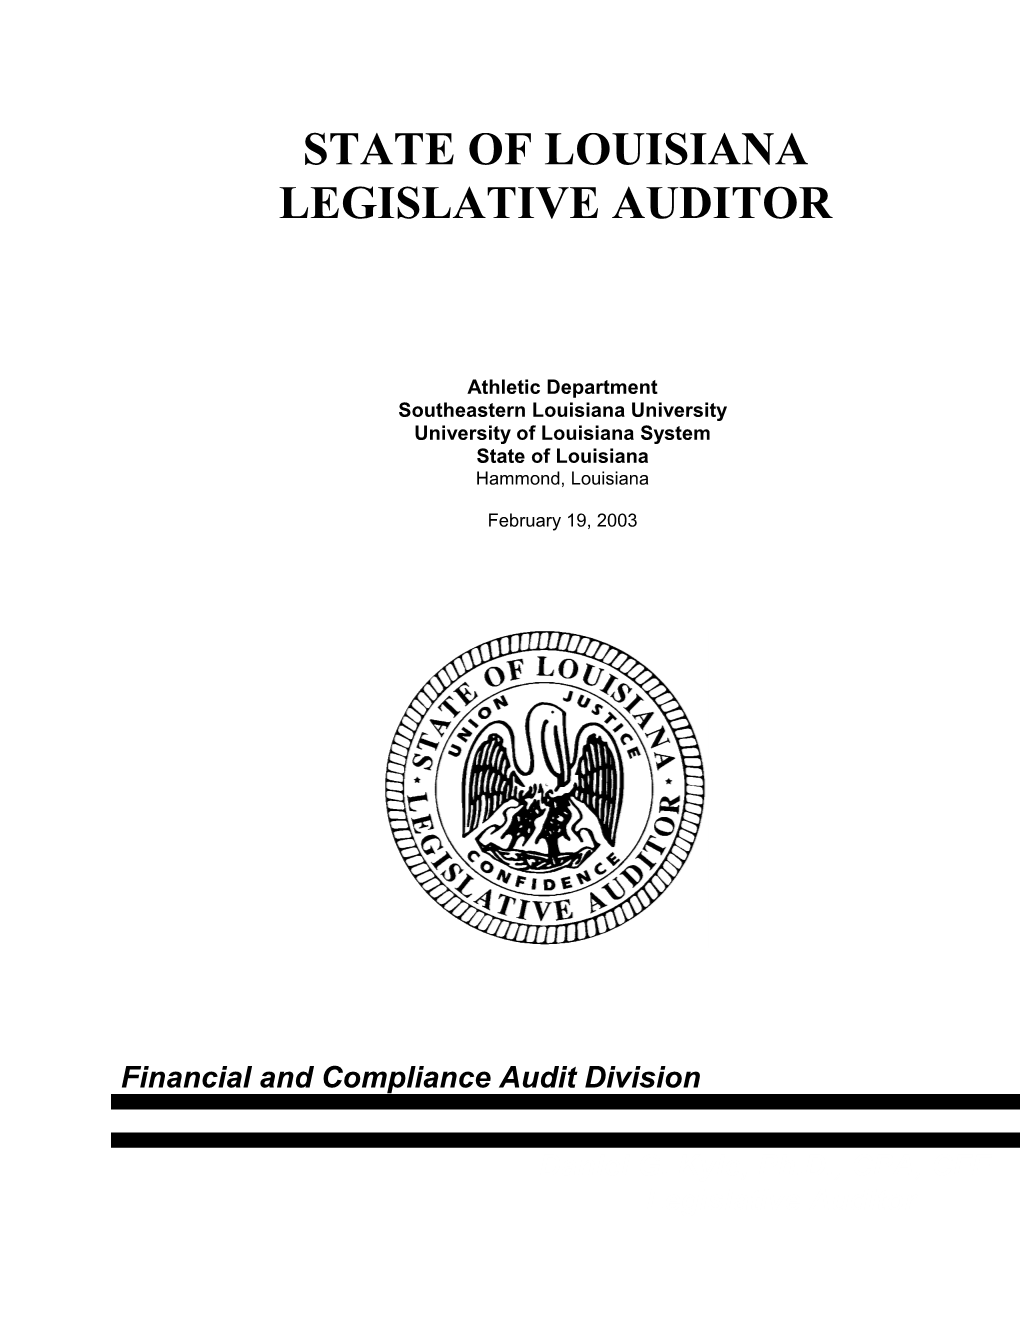 State of Louisiana Legislative Auditor